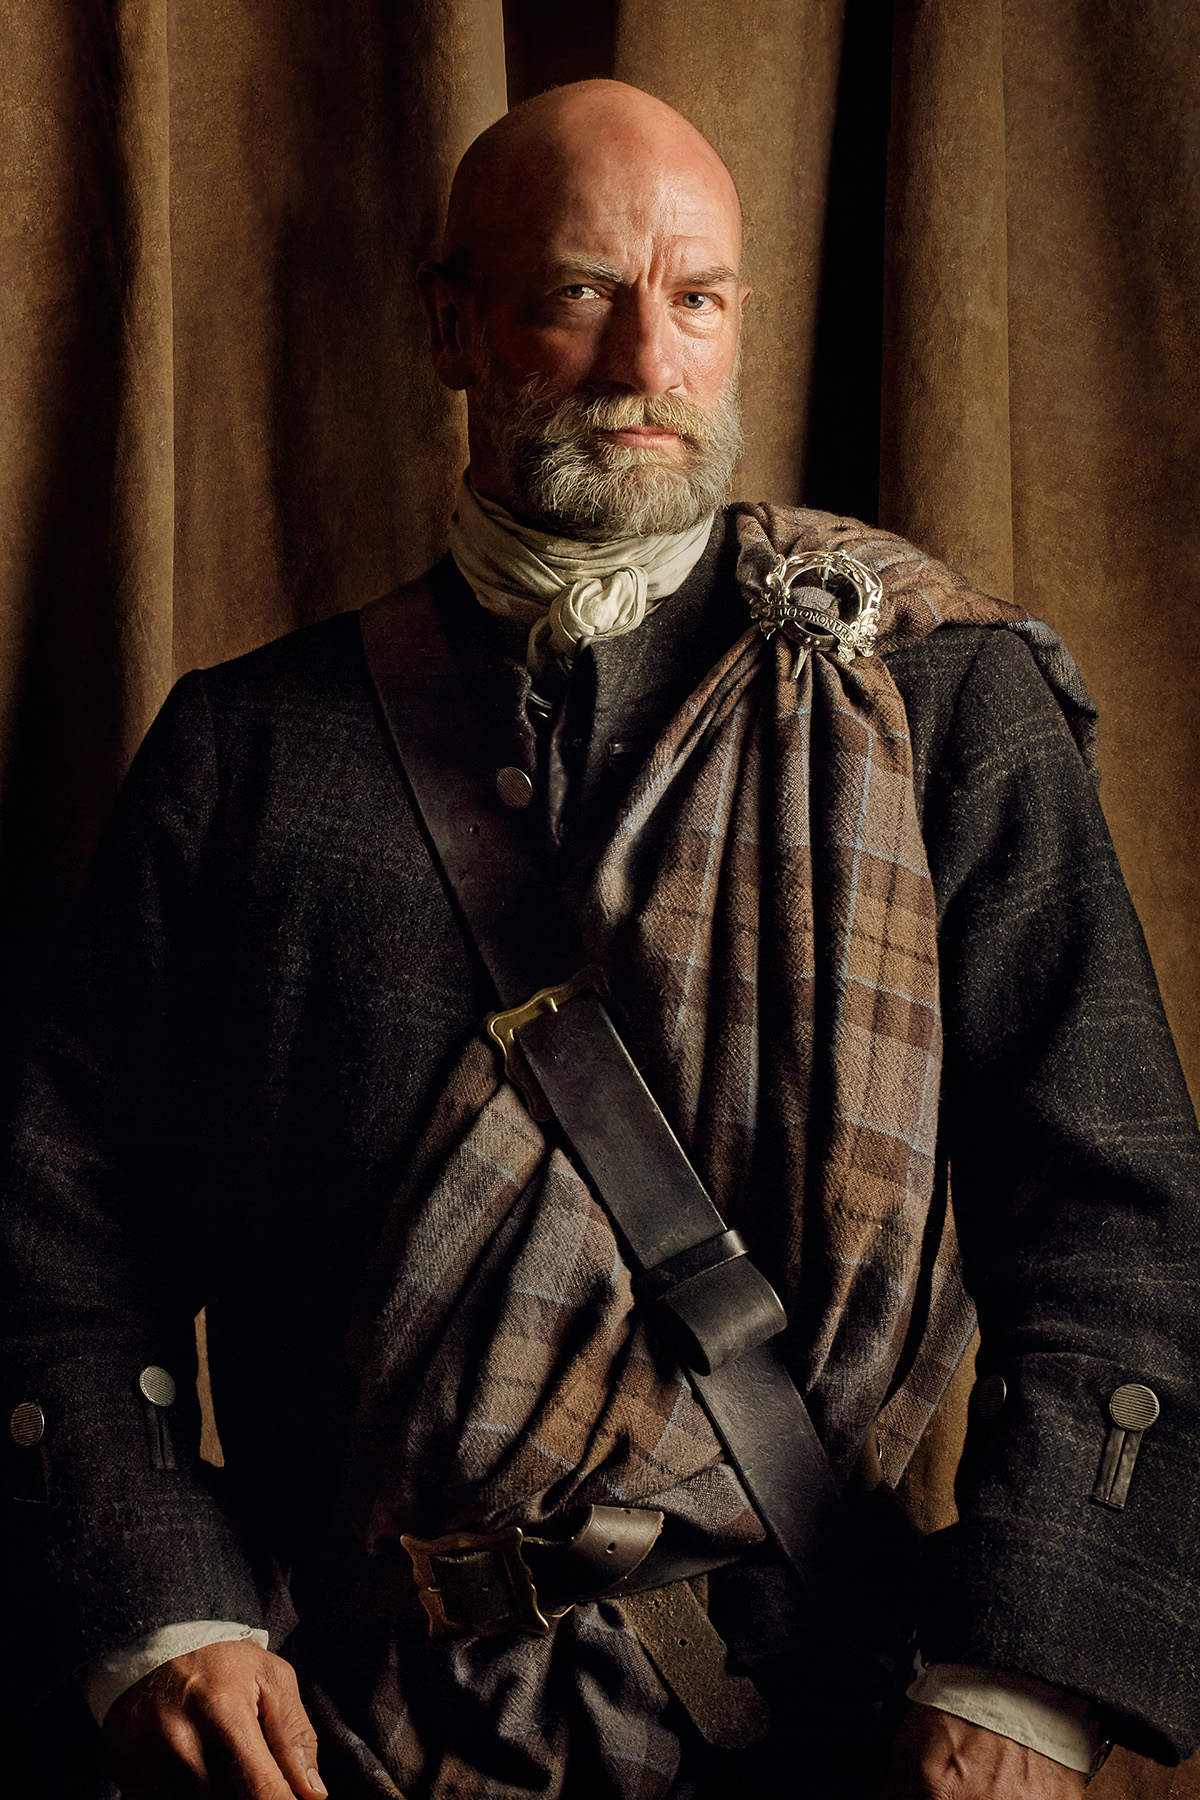 Graham McTavish as Dougal MacKenzie in Outlander - Season 2